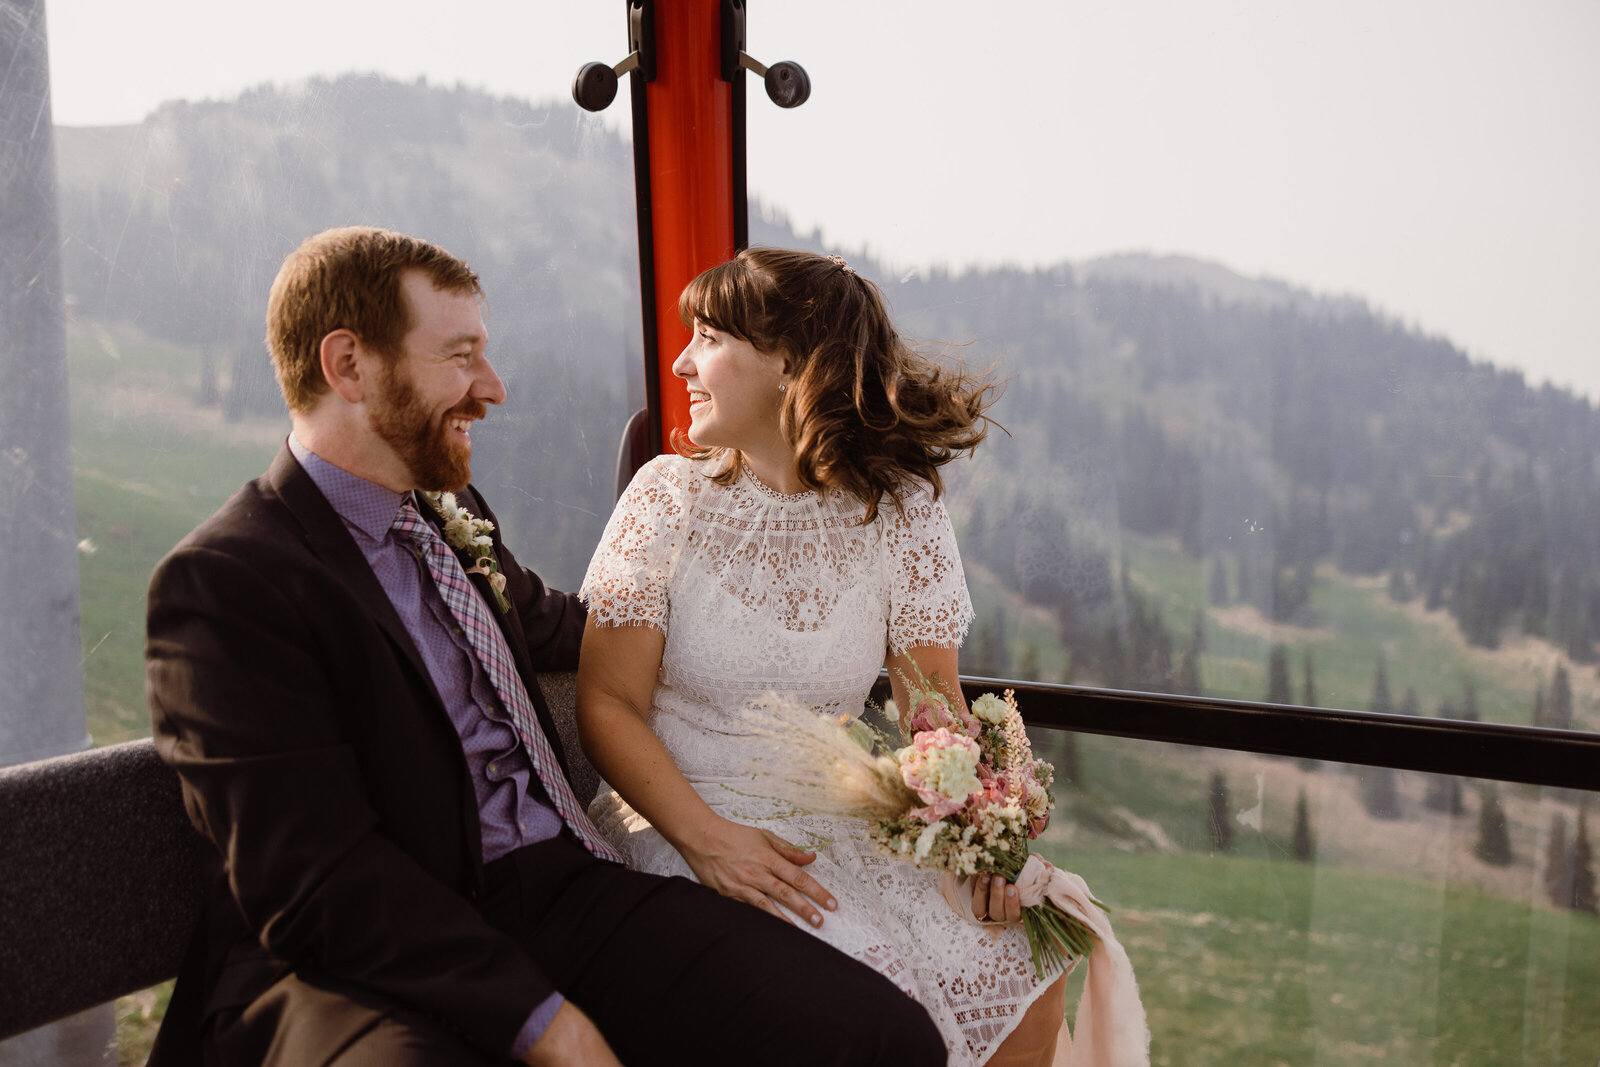 Bride and groom eloping at Crystal Mountain, Washington